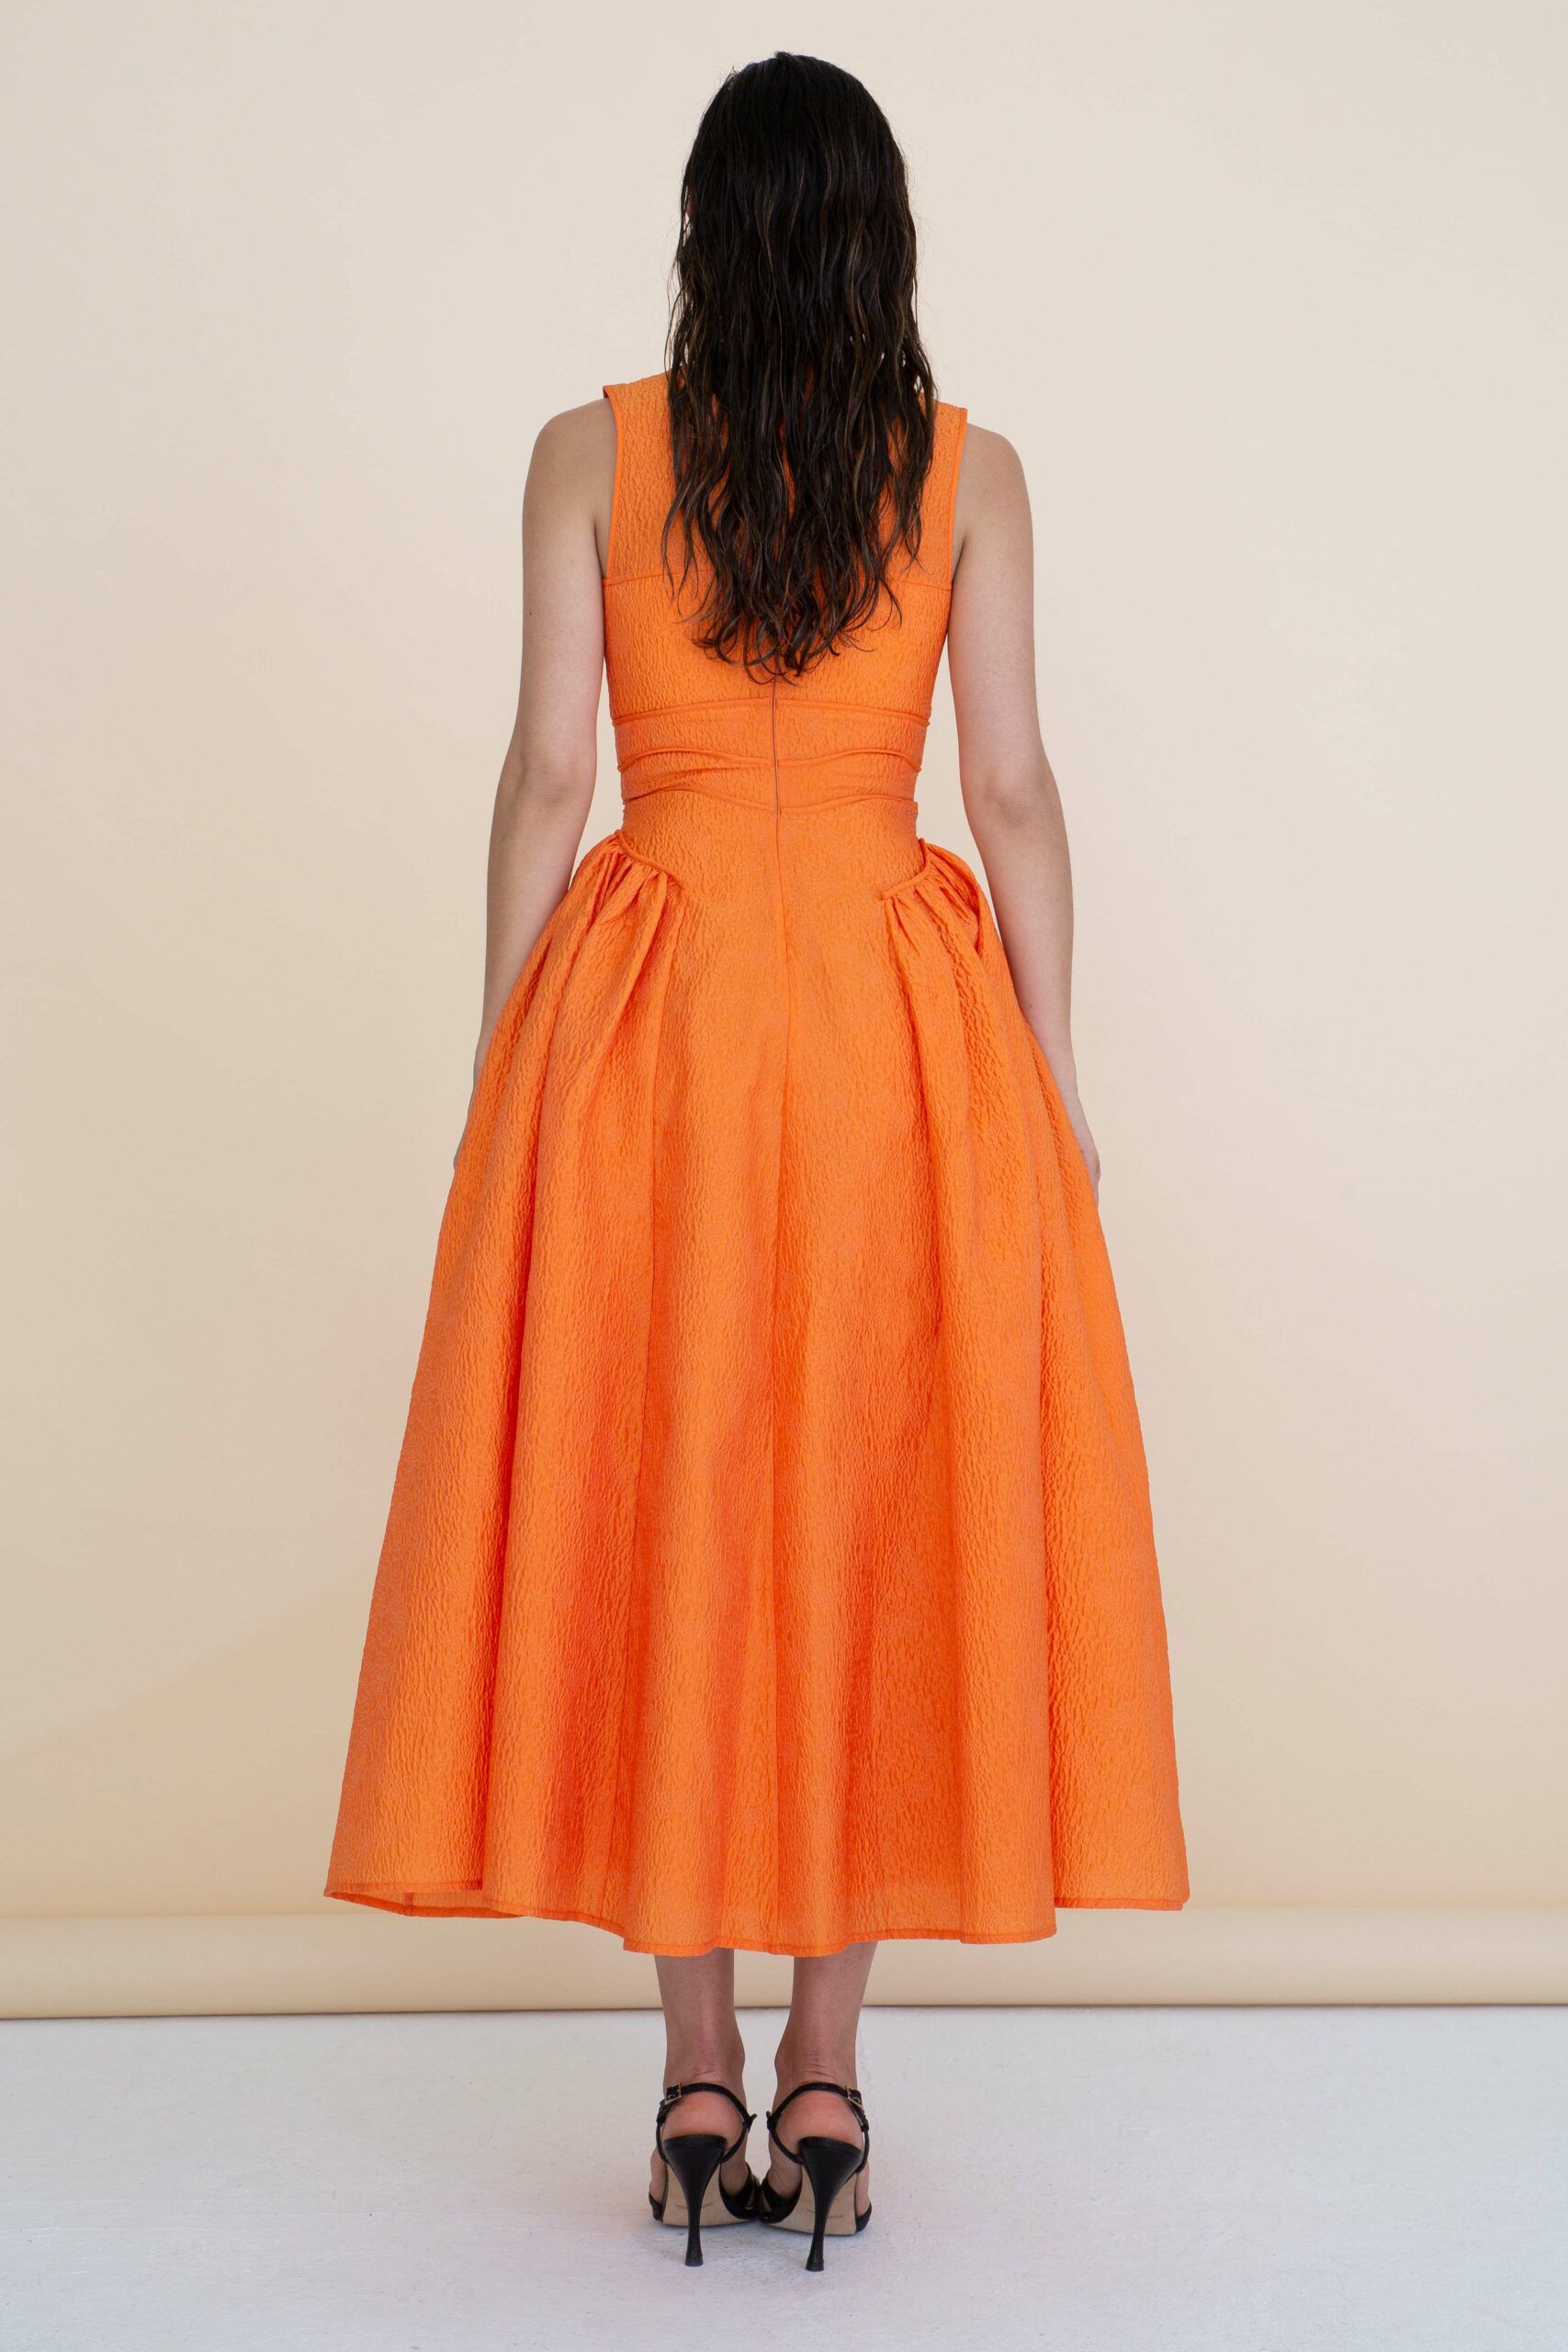 sophia-vestido-midi-naranja-corset-rachel.gilbert-2